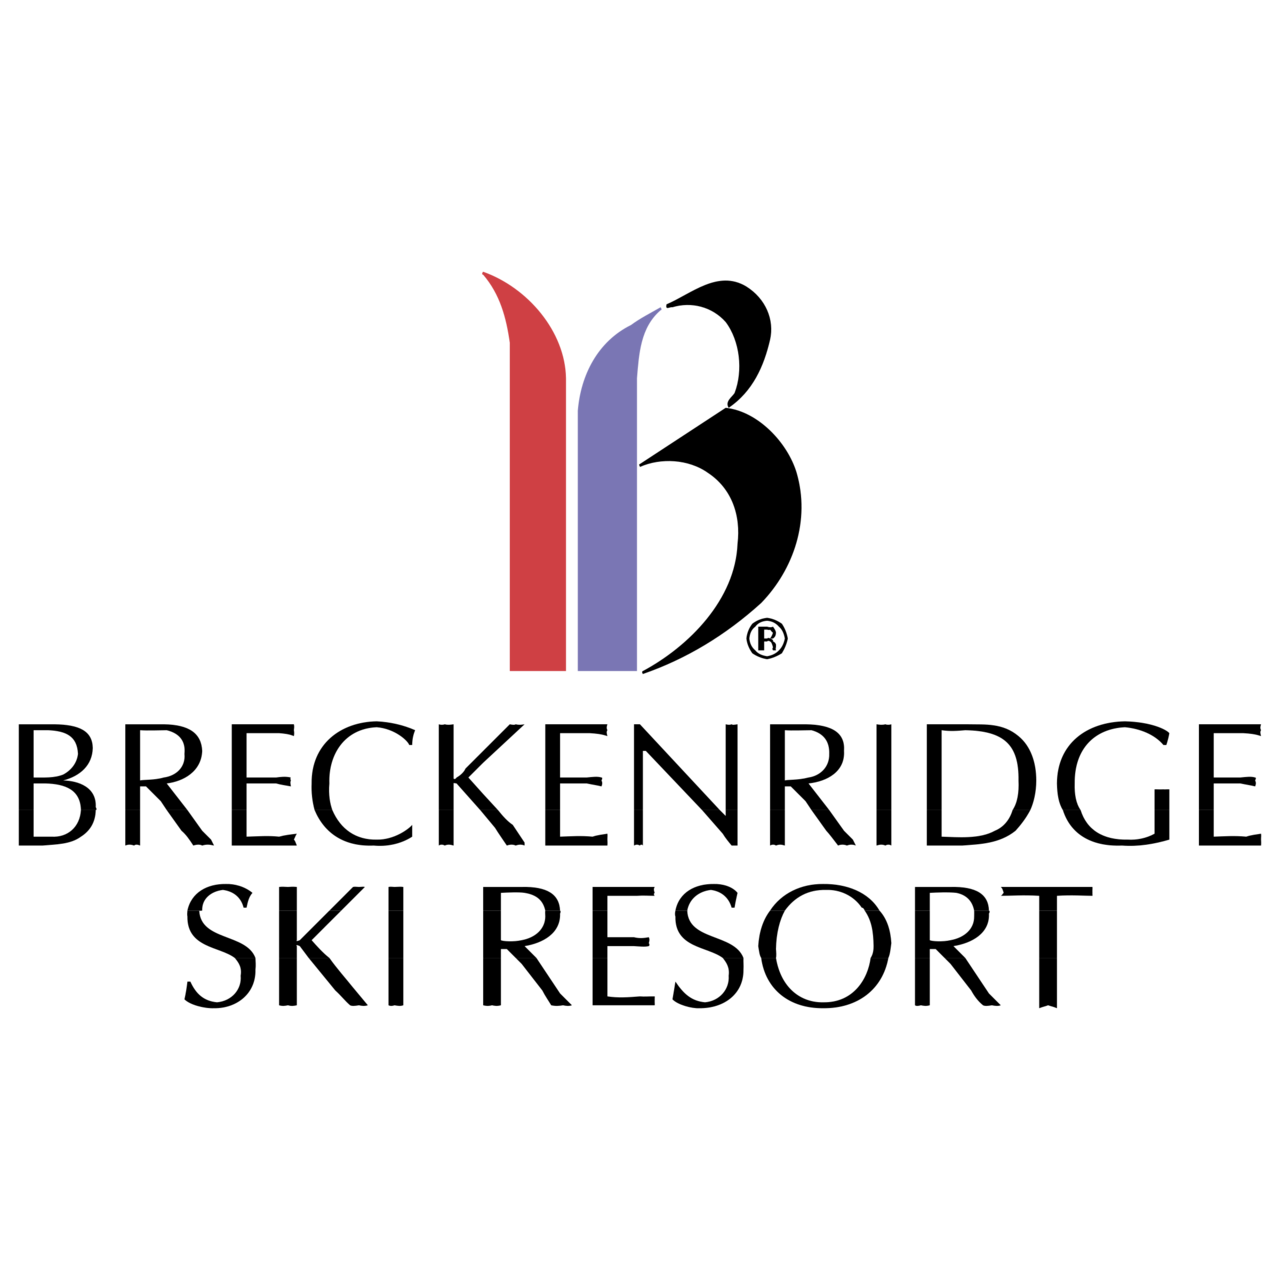 Breckenridge ski resort logo